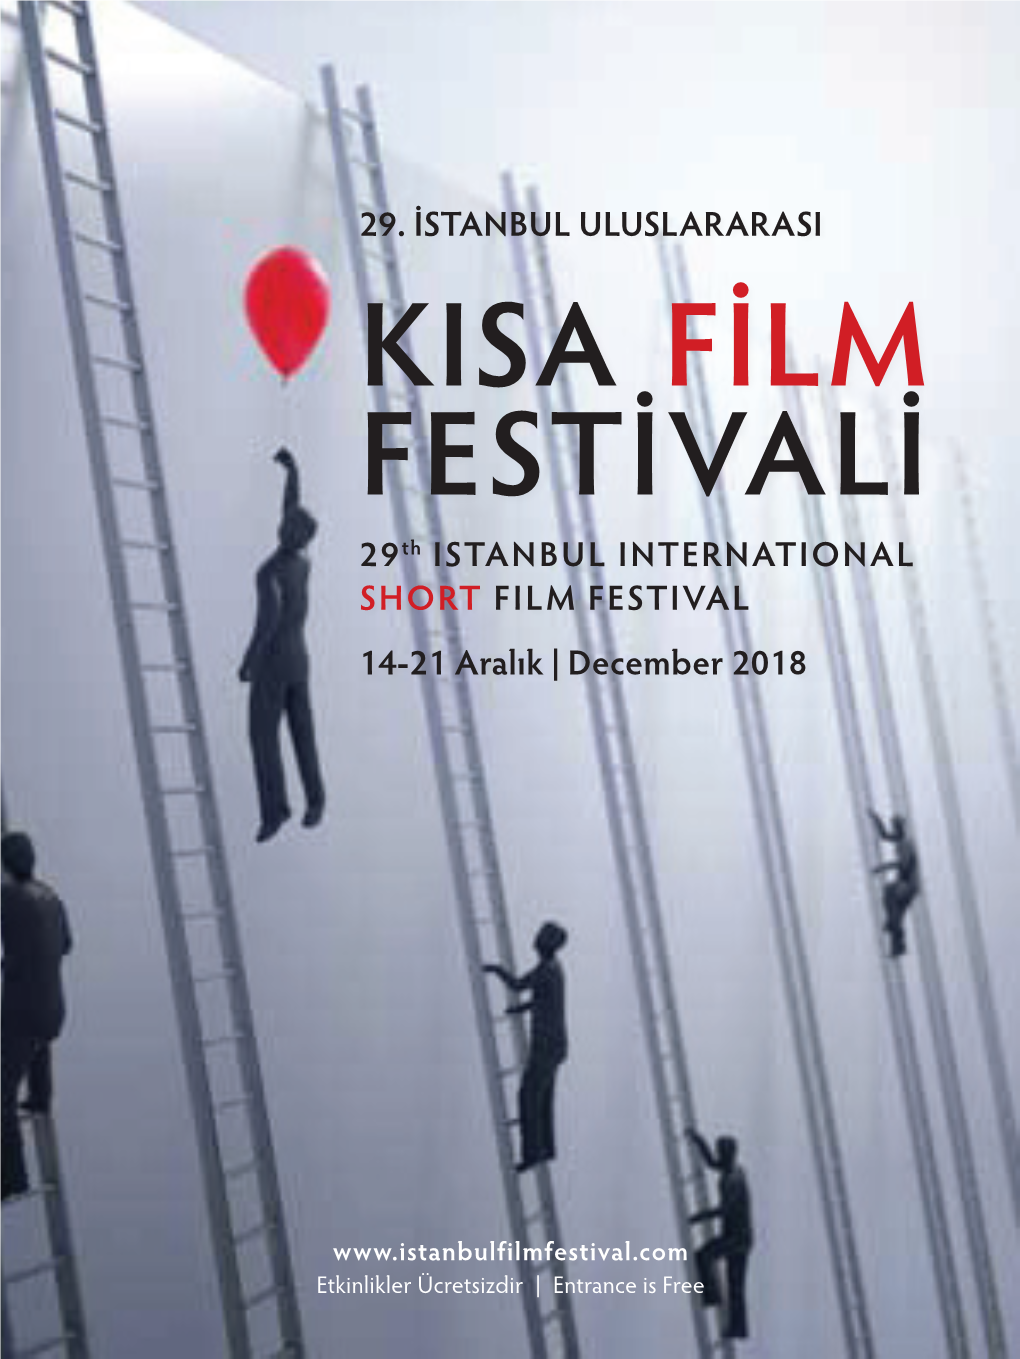 ISTANBUL INTERNATIONAL SHORT FILM FESTIVAL 14-21 Aralık | December 2018